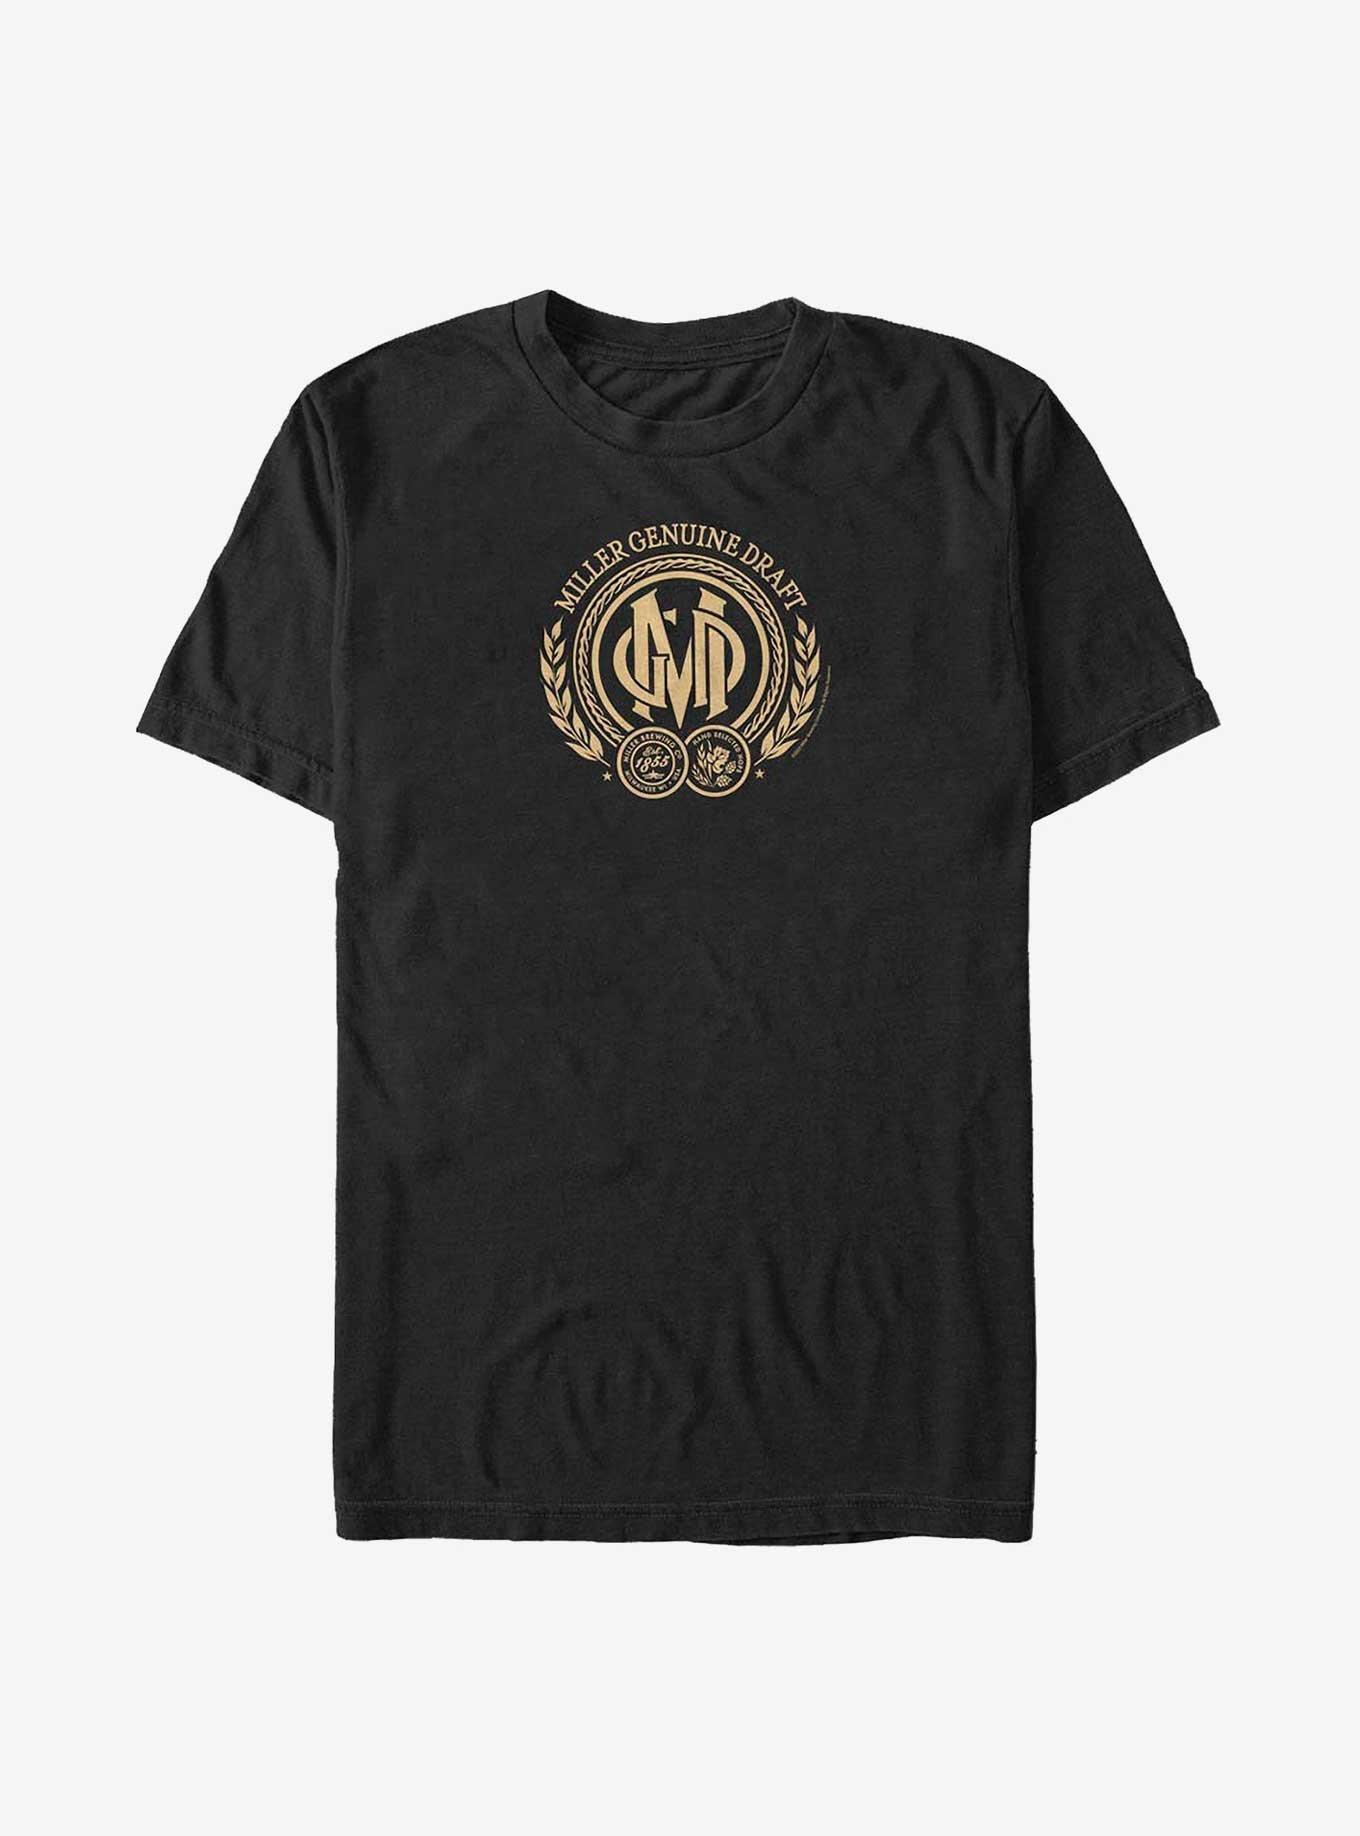 Coors Miller Genuine Draft Seal T-Shirt, BLACK, hi-res